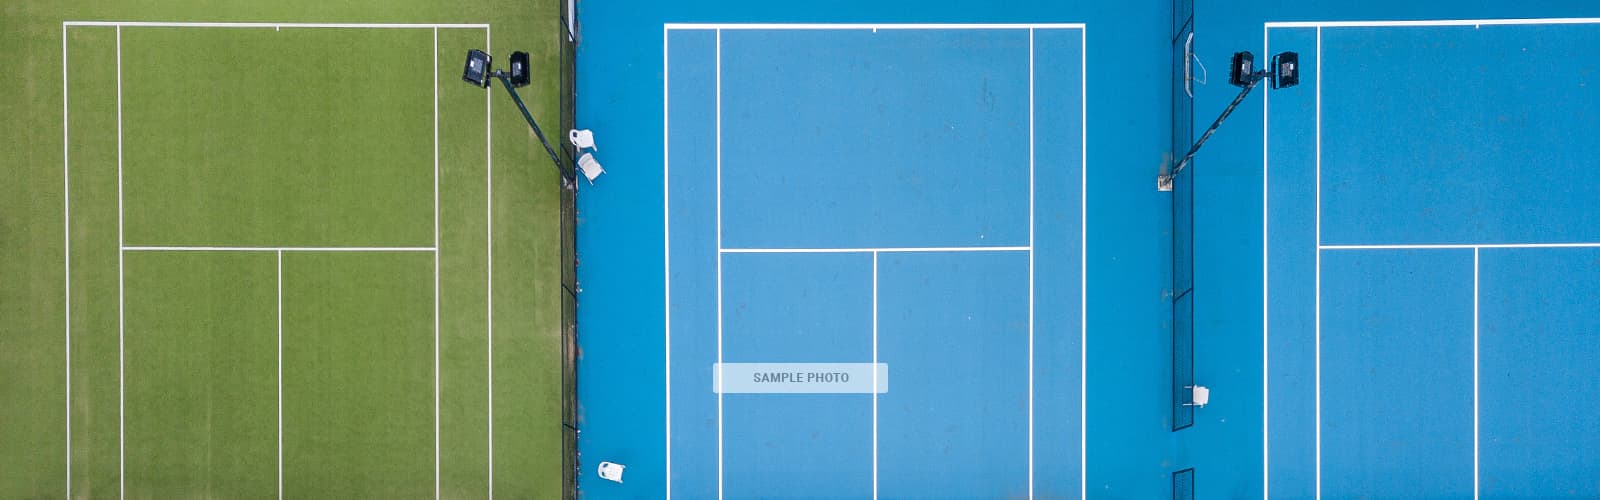 Lakewood Ranch High School Tennis Courts in Bradenton Florida